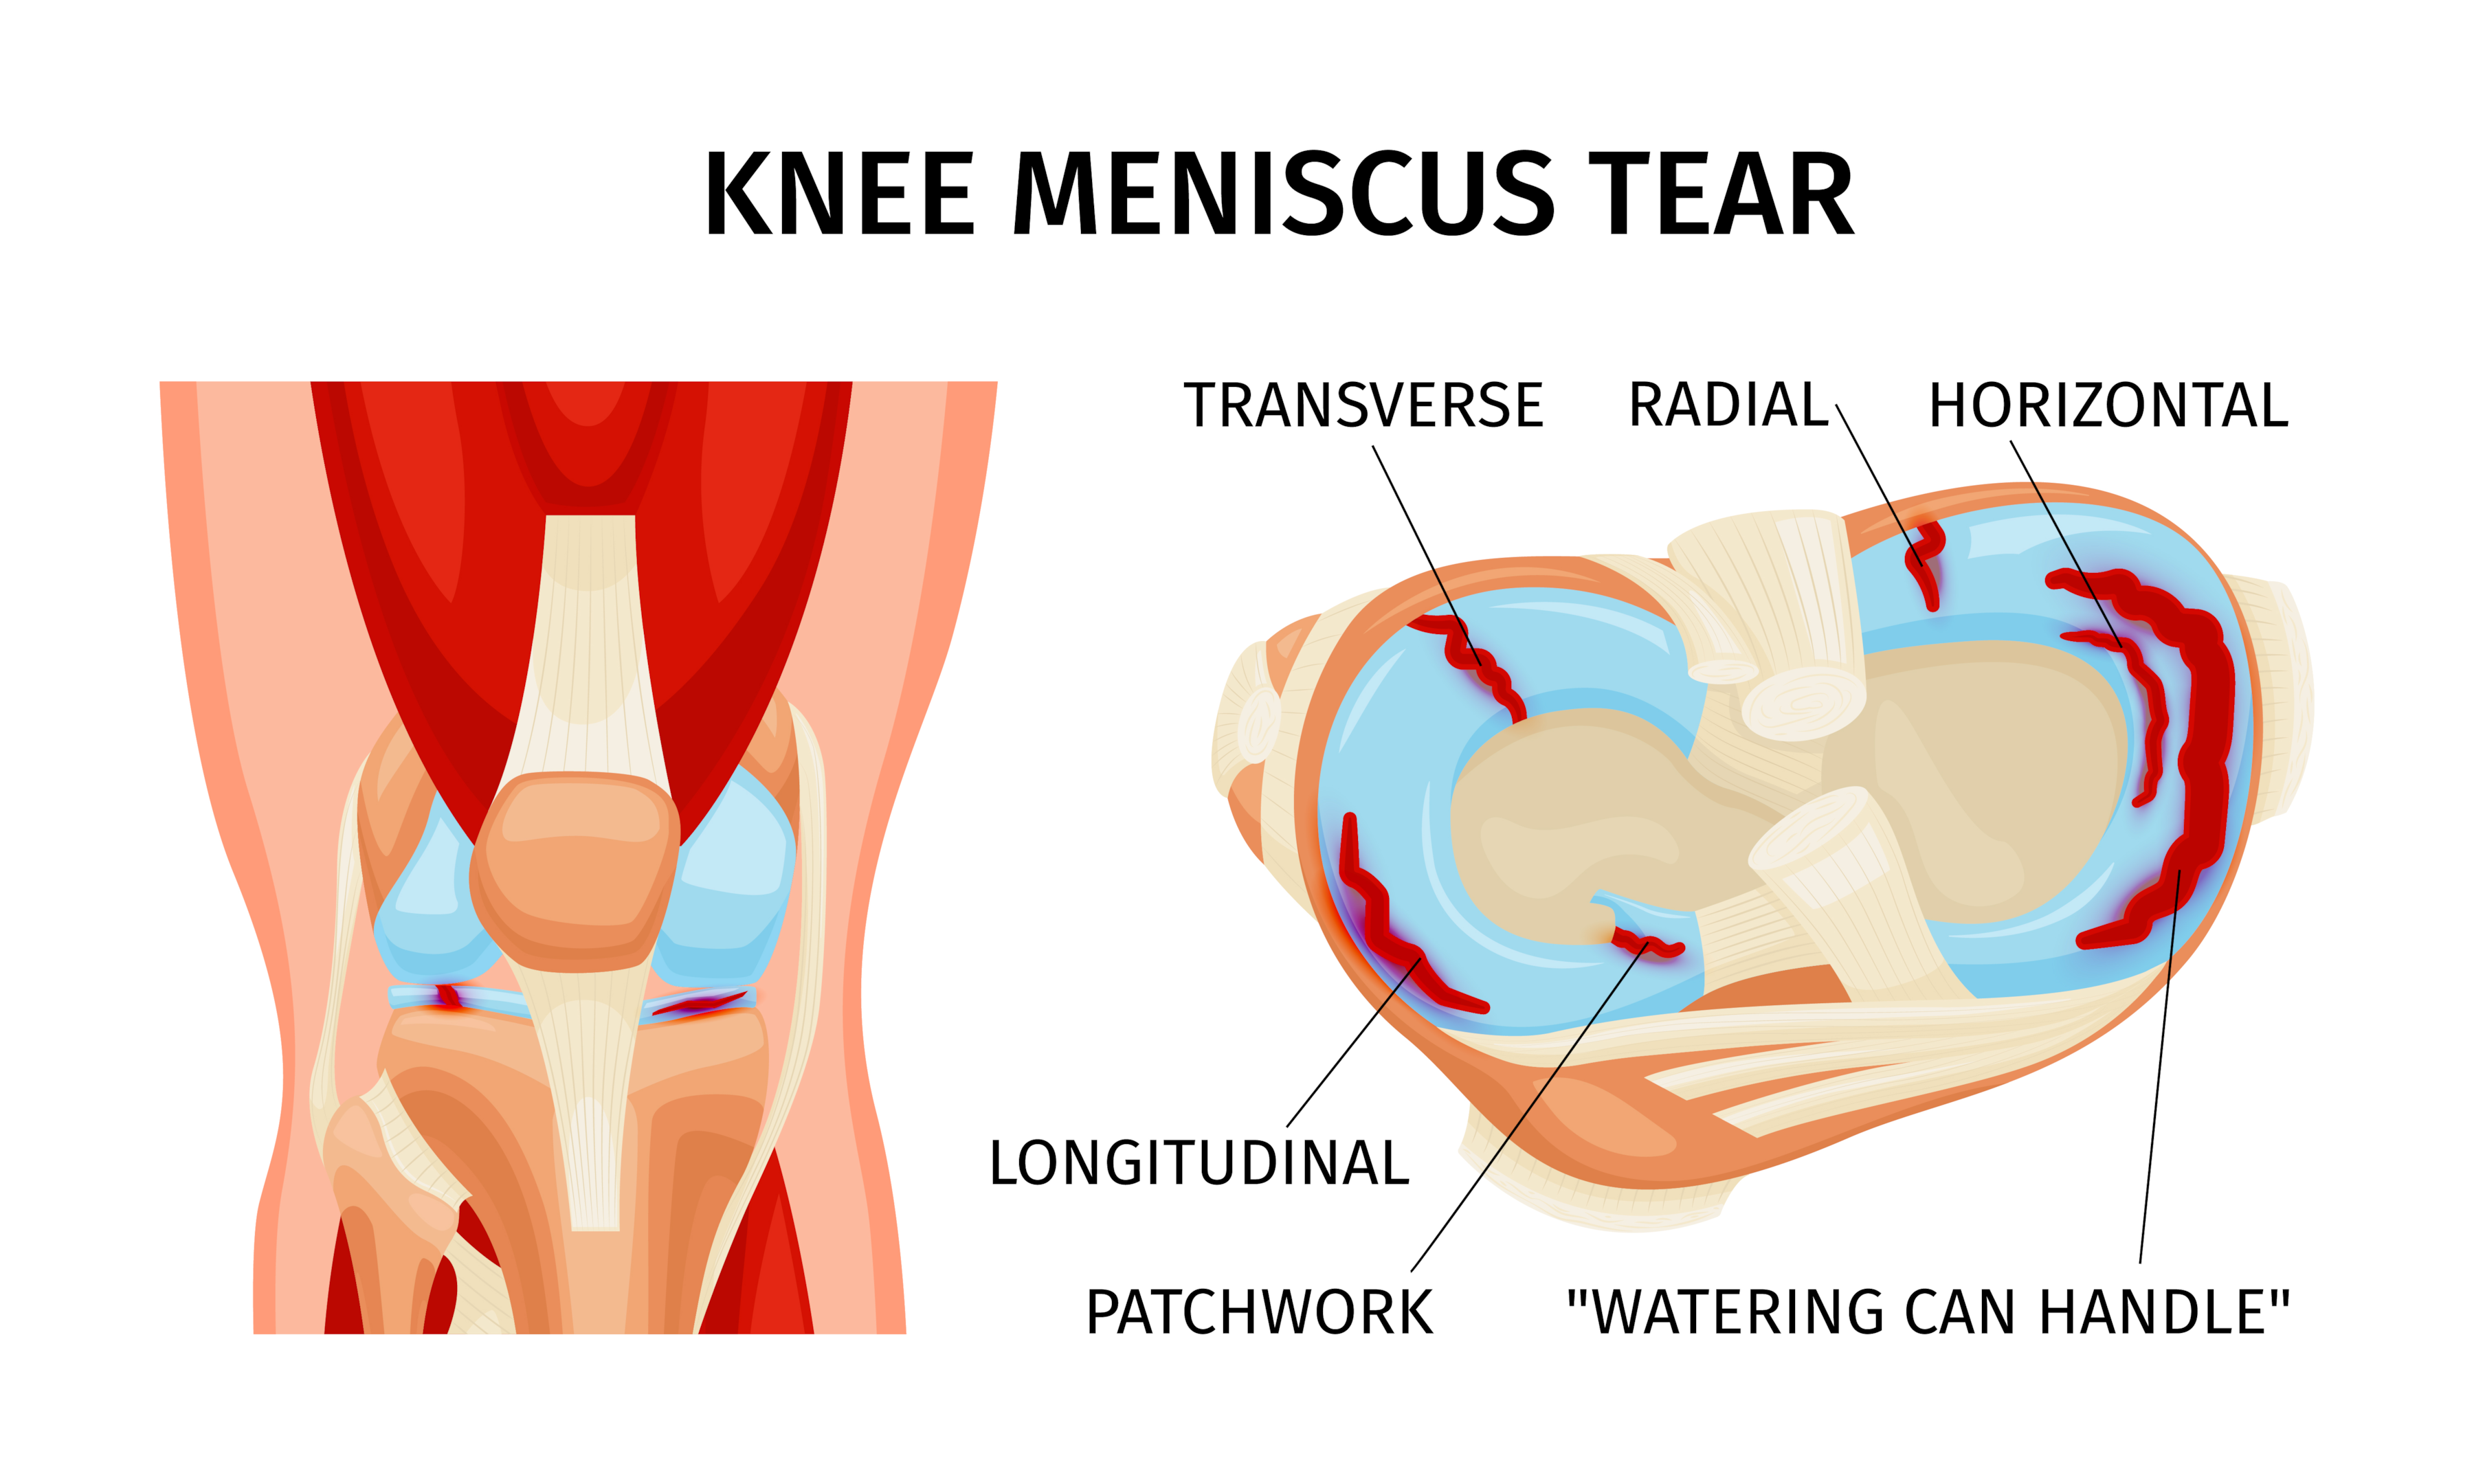 Knee meniscus tear anatomy diagram